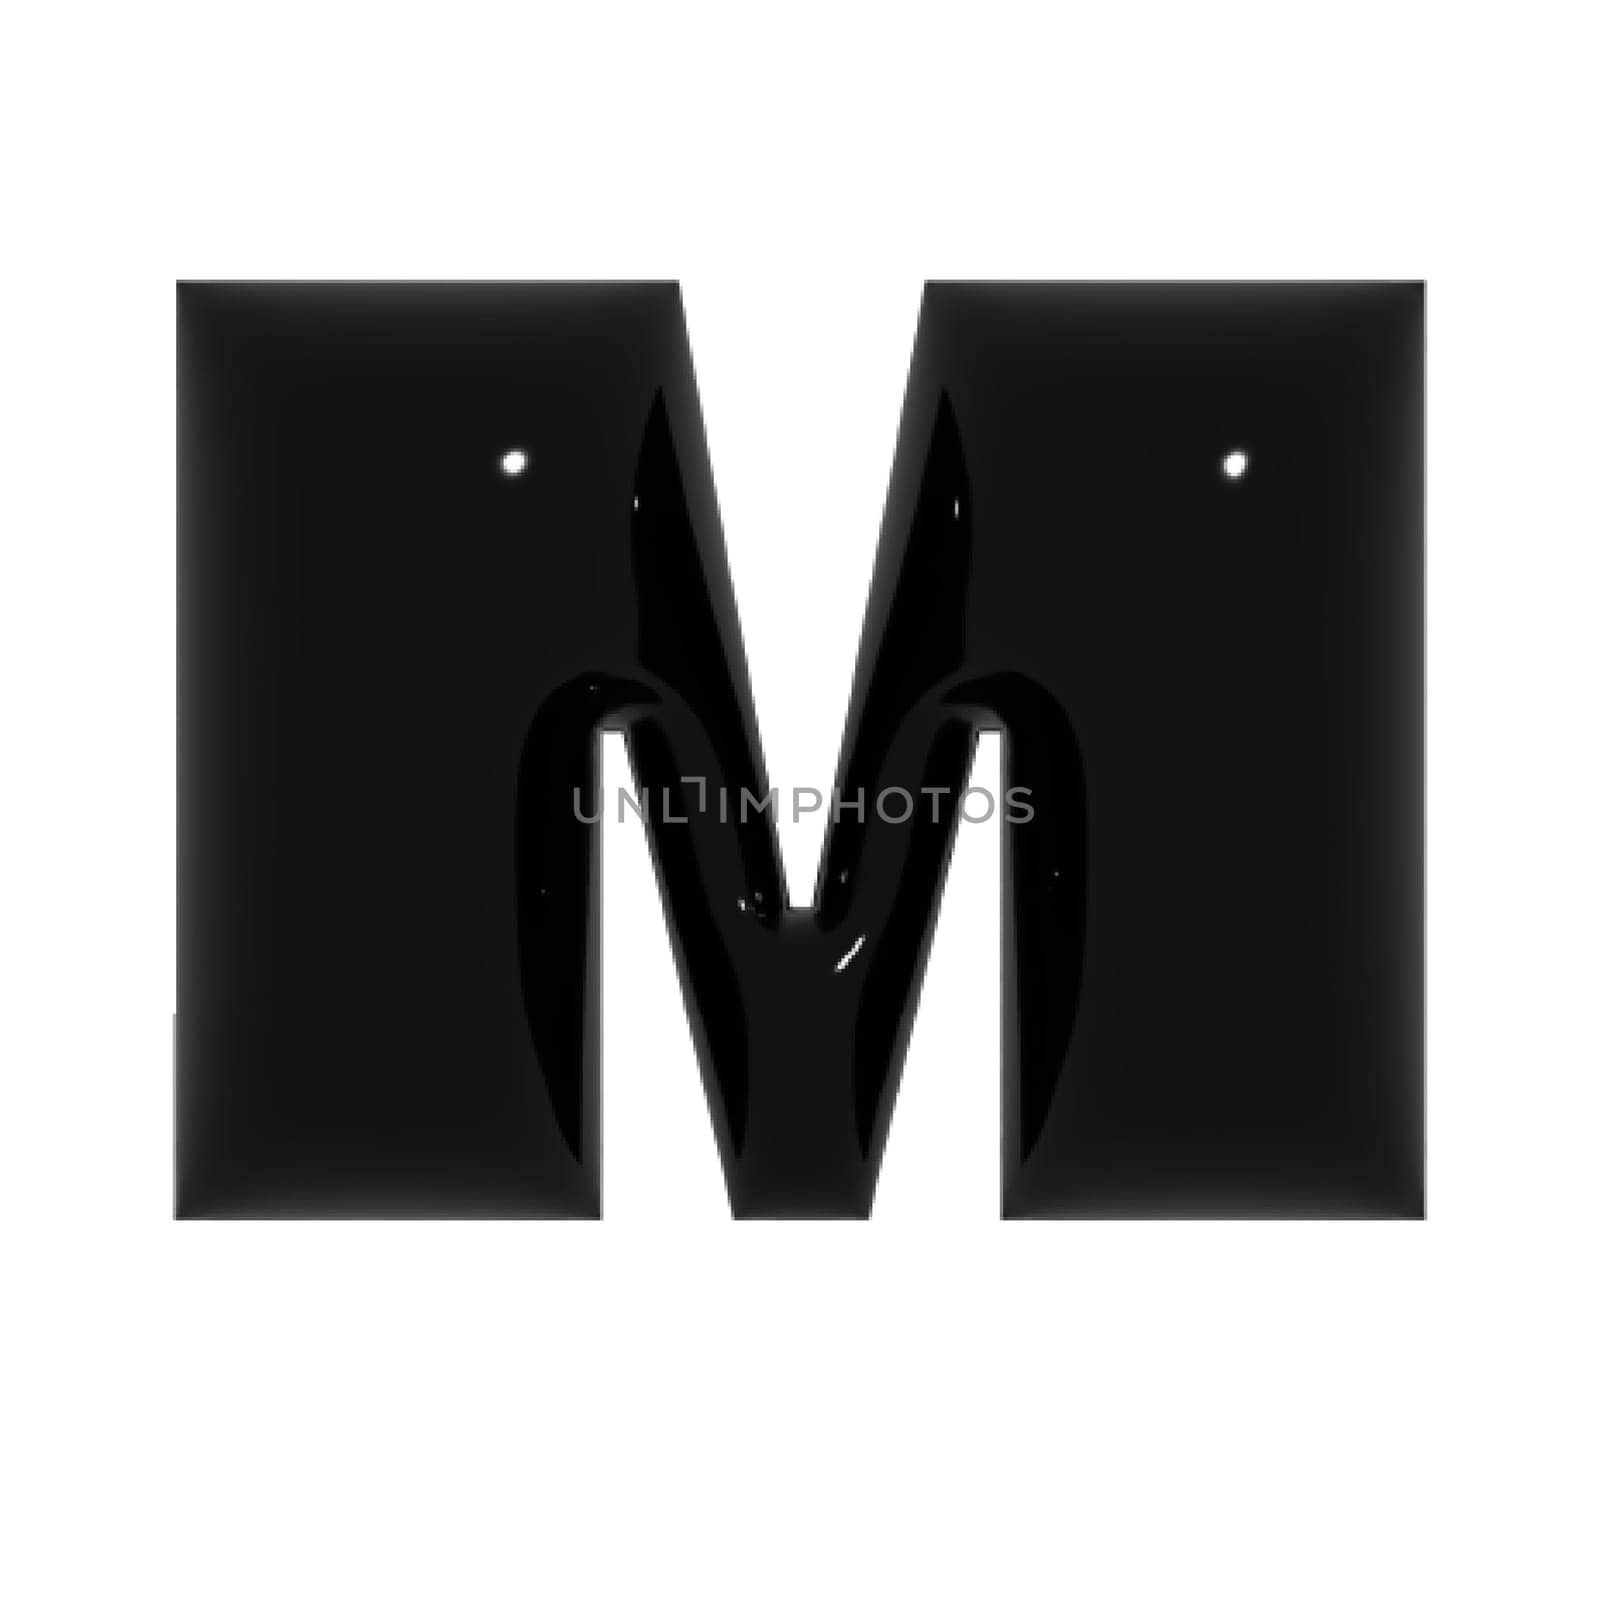 Black metal shiny reflective letter M 3D illustration by Dustick